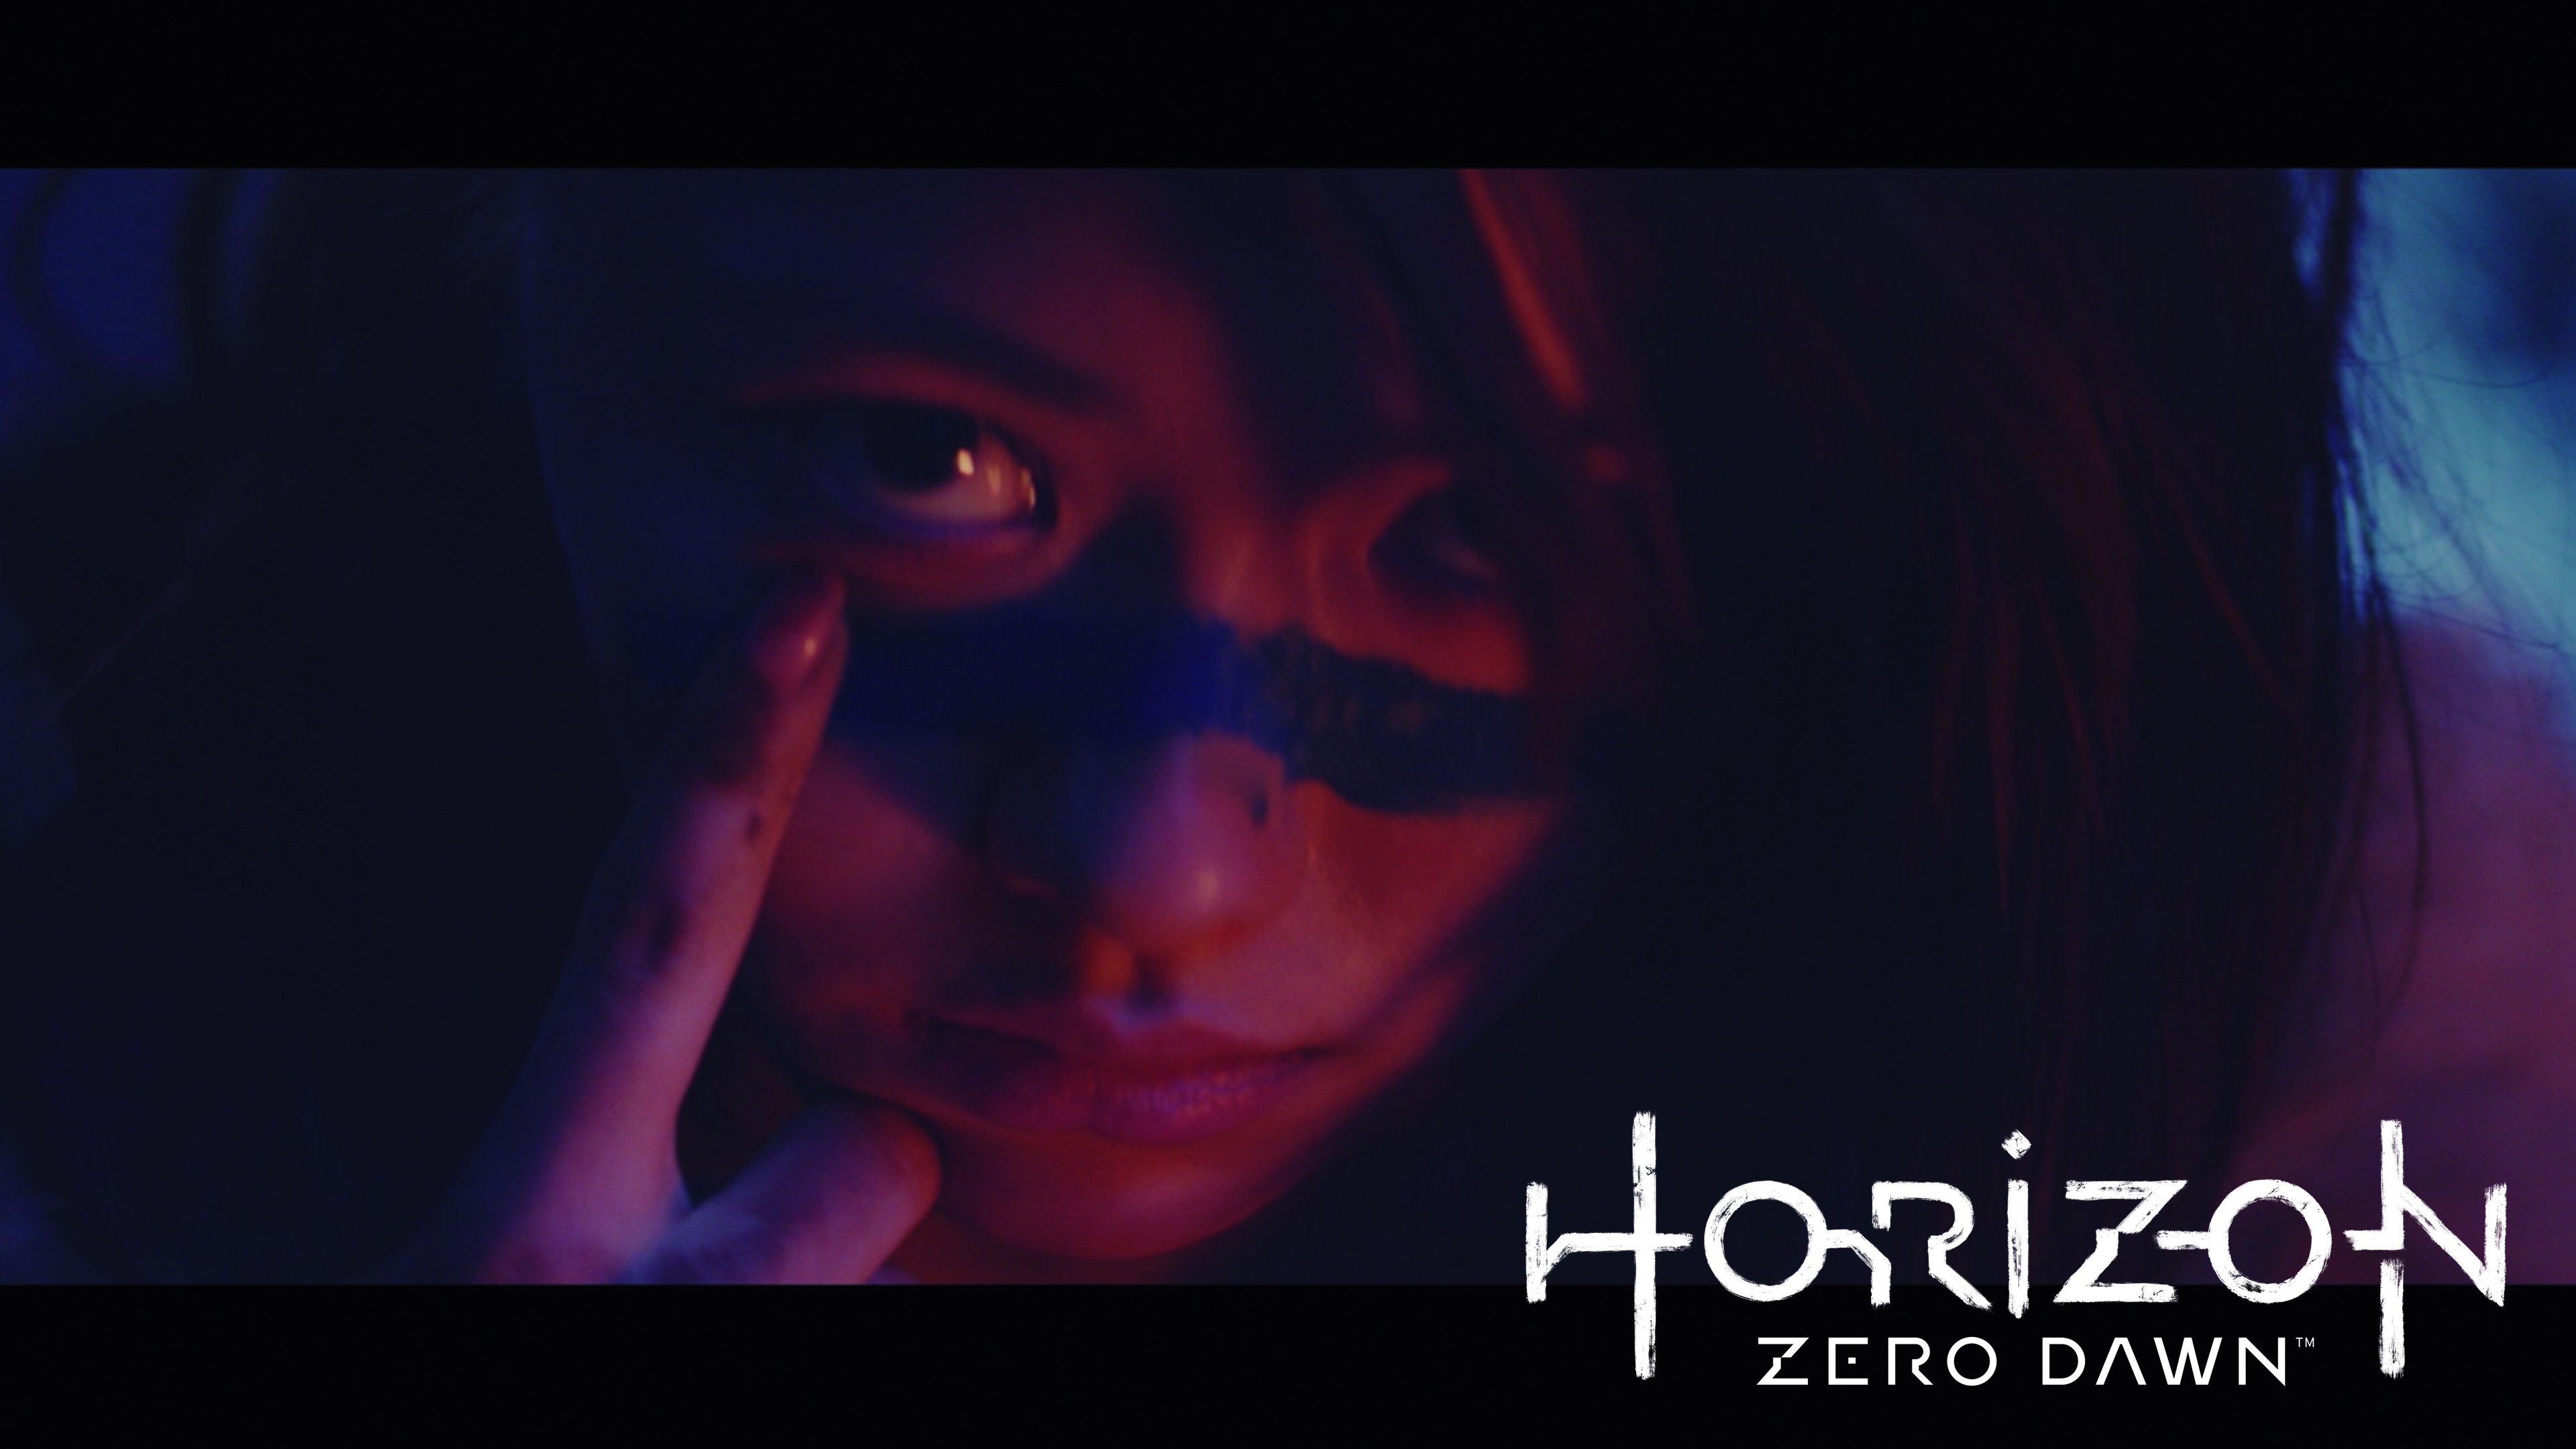 Horizon Zero Dawn 発売記念 特別映像公開のお知らせ ゲームの世界をリアルに再現 東京とは思えない神秘的な世界で女ハンター 山本舞香が森の中を駆け抜ける 株式会社ソニー インタラクティブエンタテインメントのプレスリリース